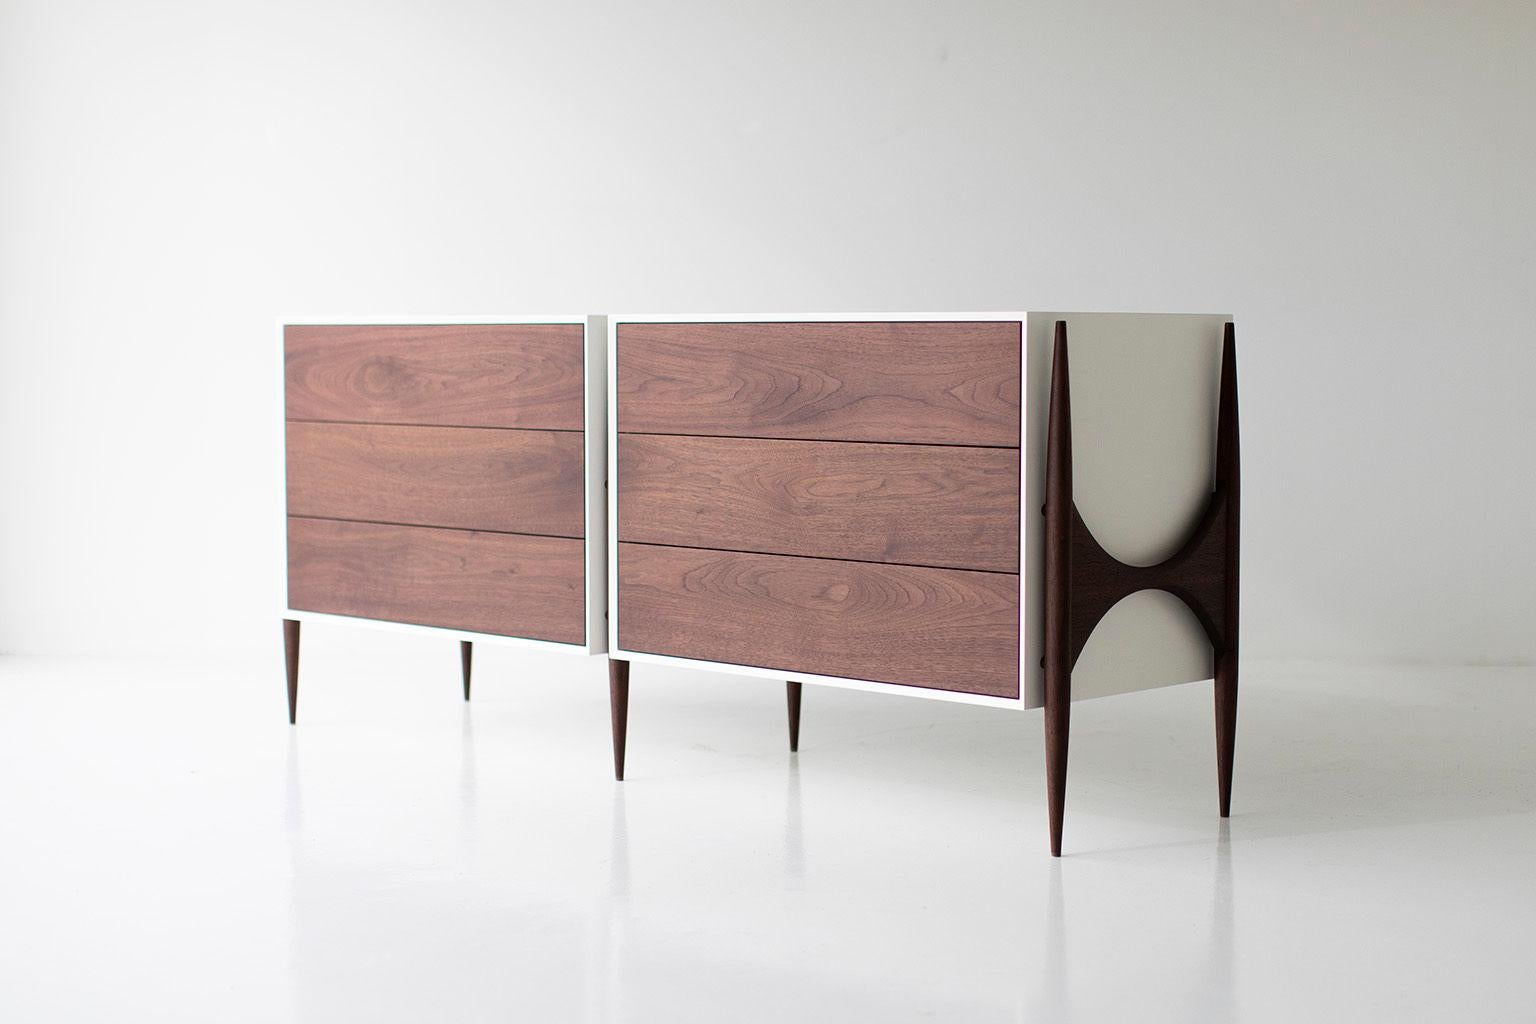 Designer: Laura Trenchard

Manufacturer: Craft Associates Modern Furniture
Period/Model: Mid-Century Modern
Specs: Maple, Walnut

Dimensions

H: 30.25 (76.84cm)
L: 73.5 (198.12cm)
D: 20 (45.72cm)

condition

This Laura Trenchard modern